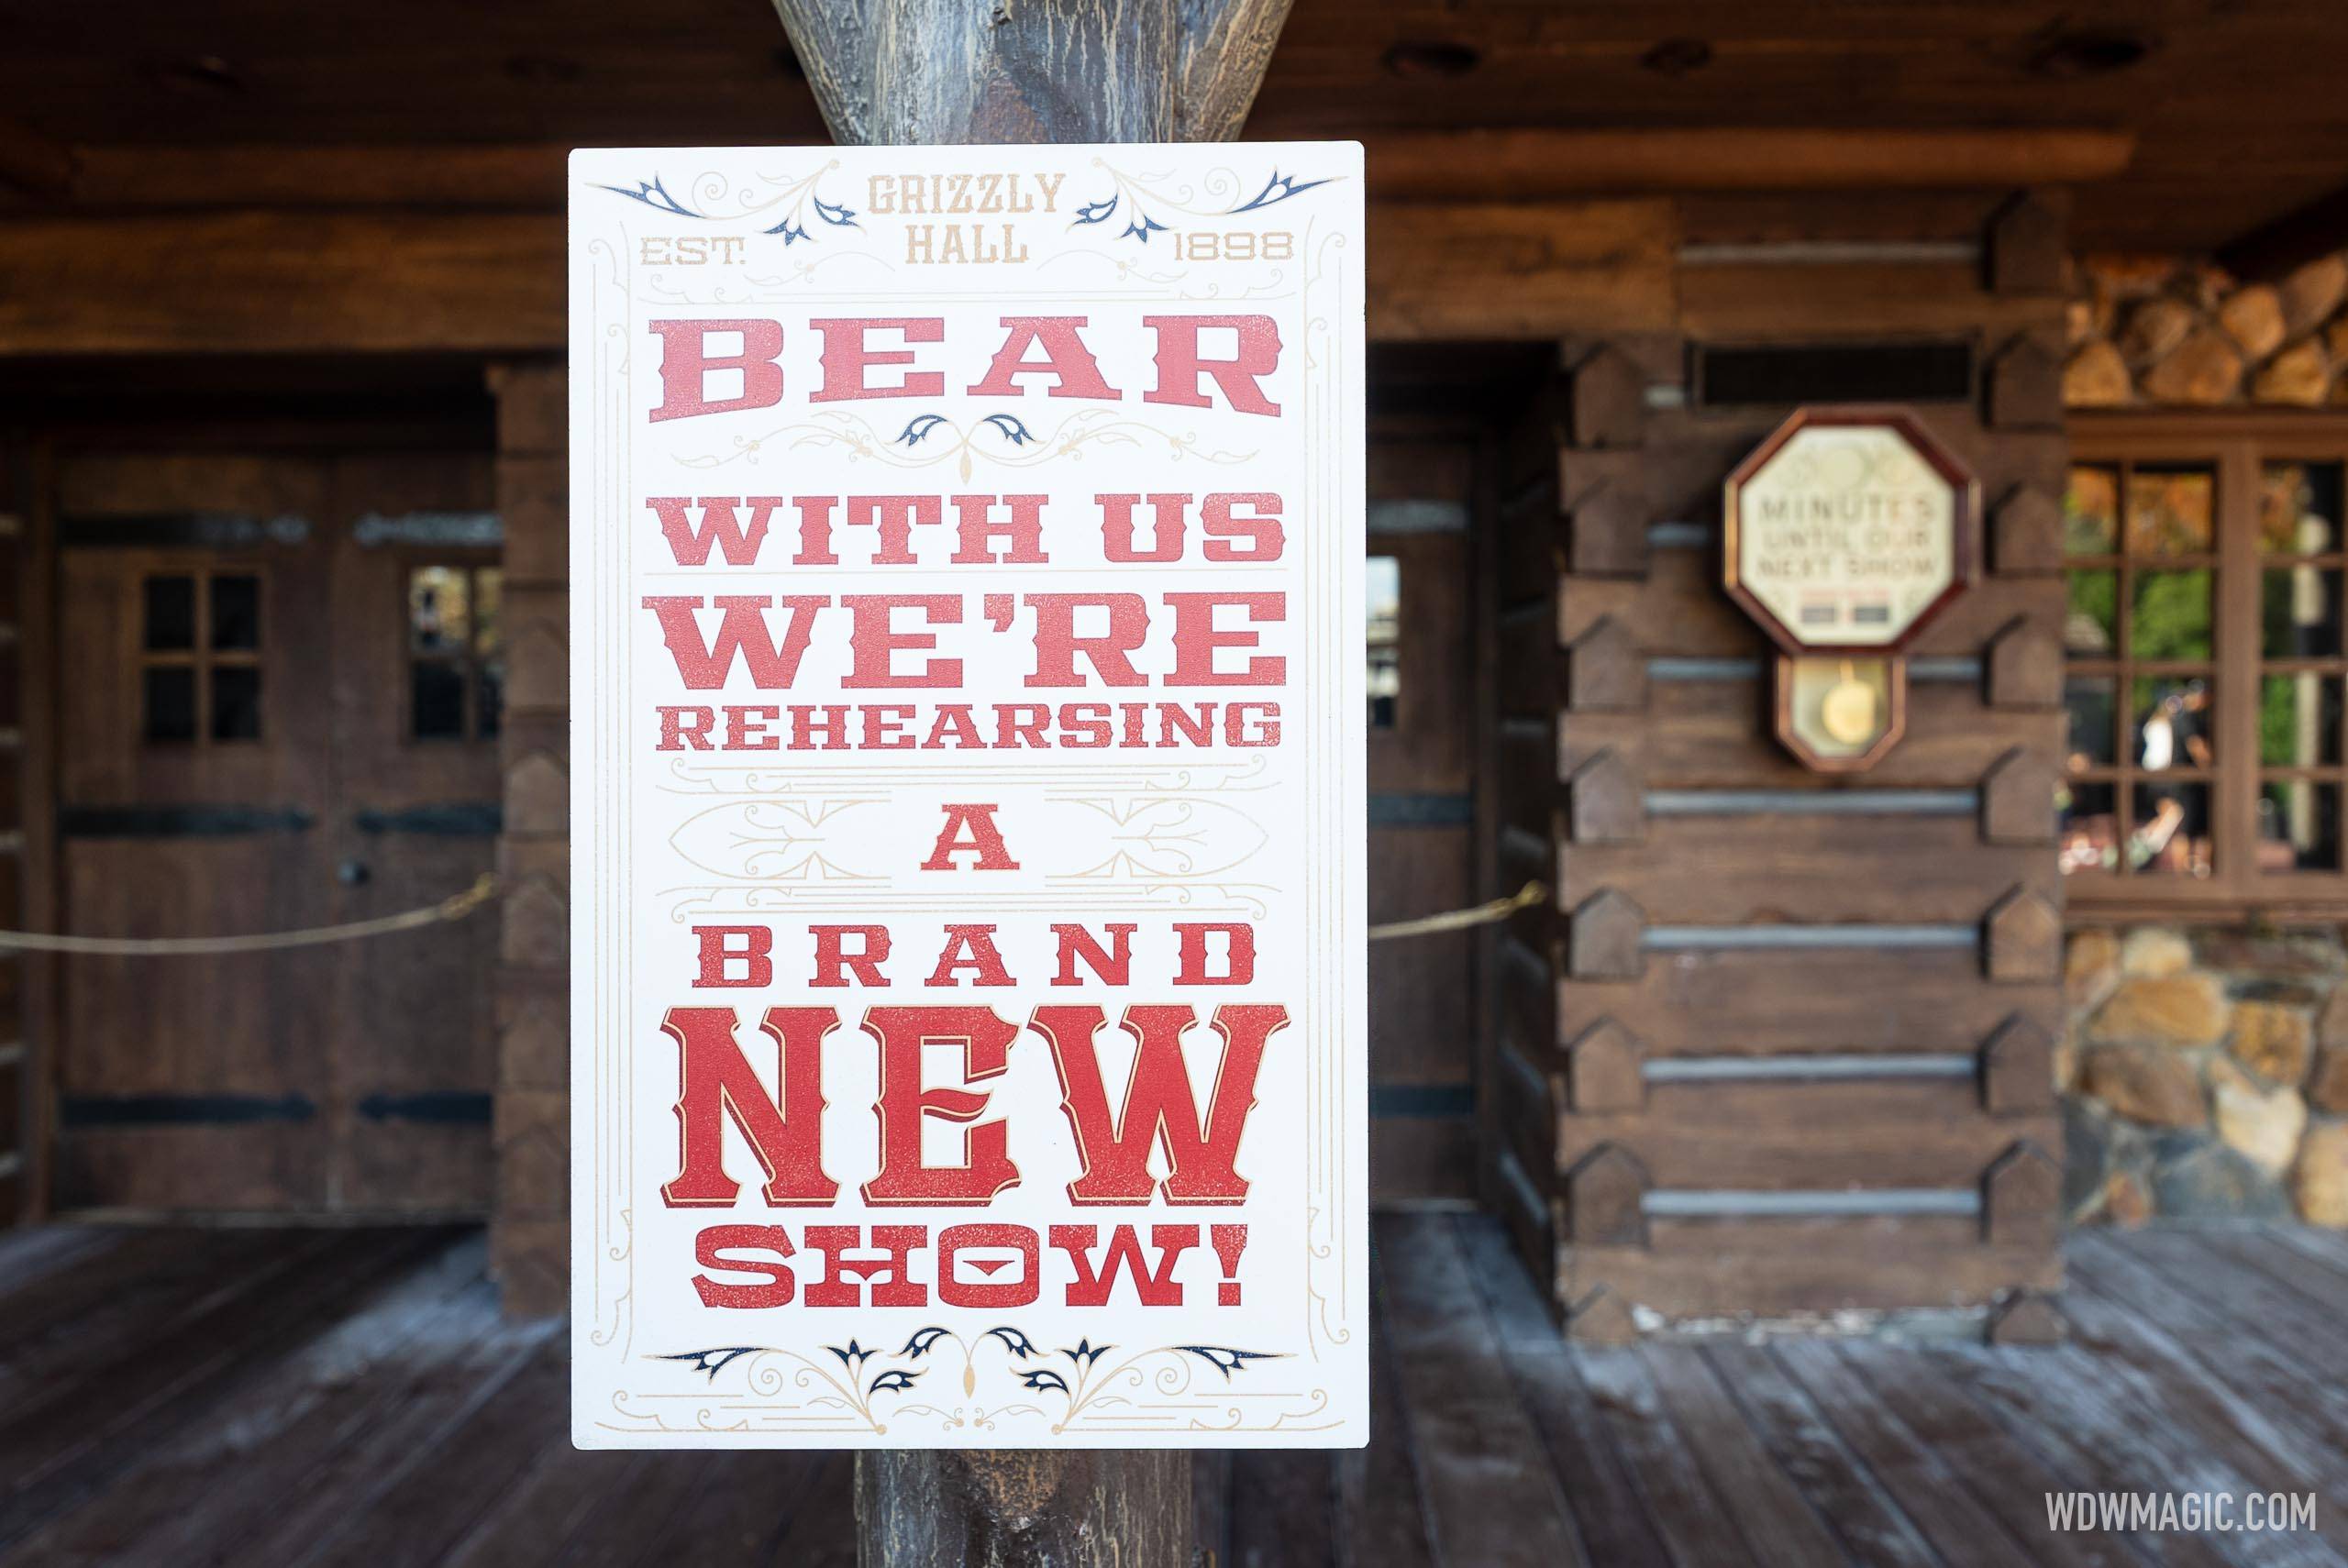 Country Bear Jamboree closed - January 27 2024